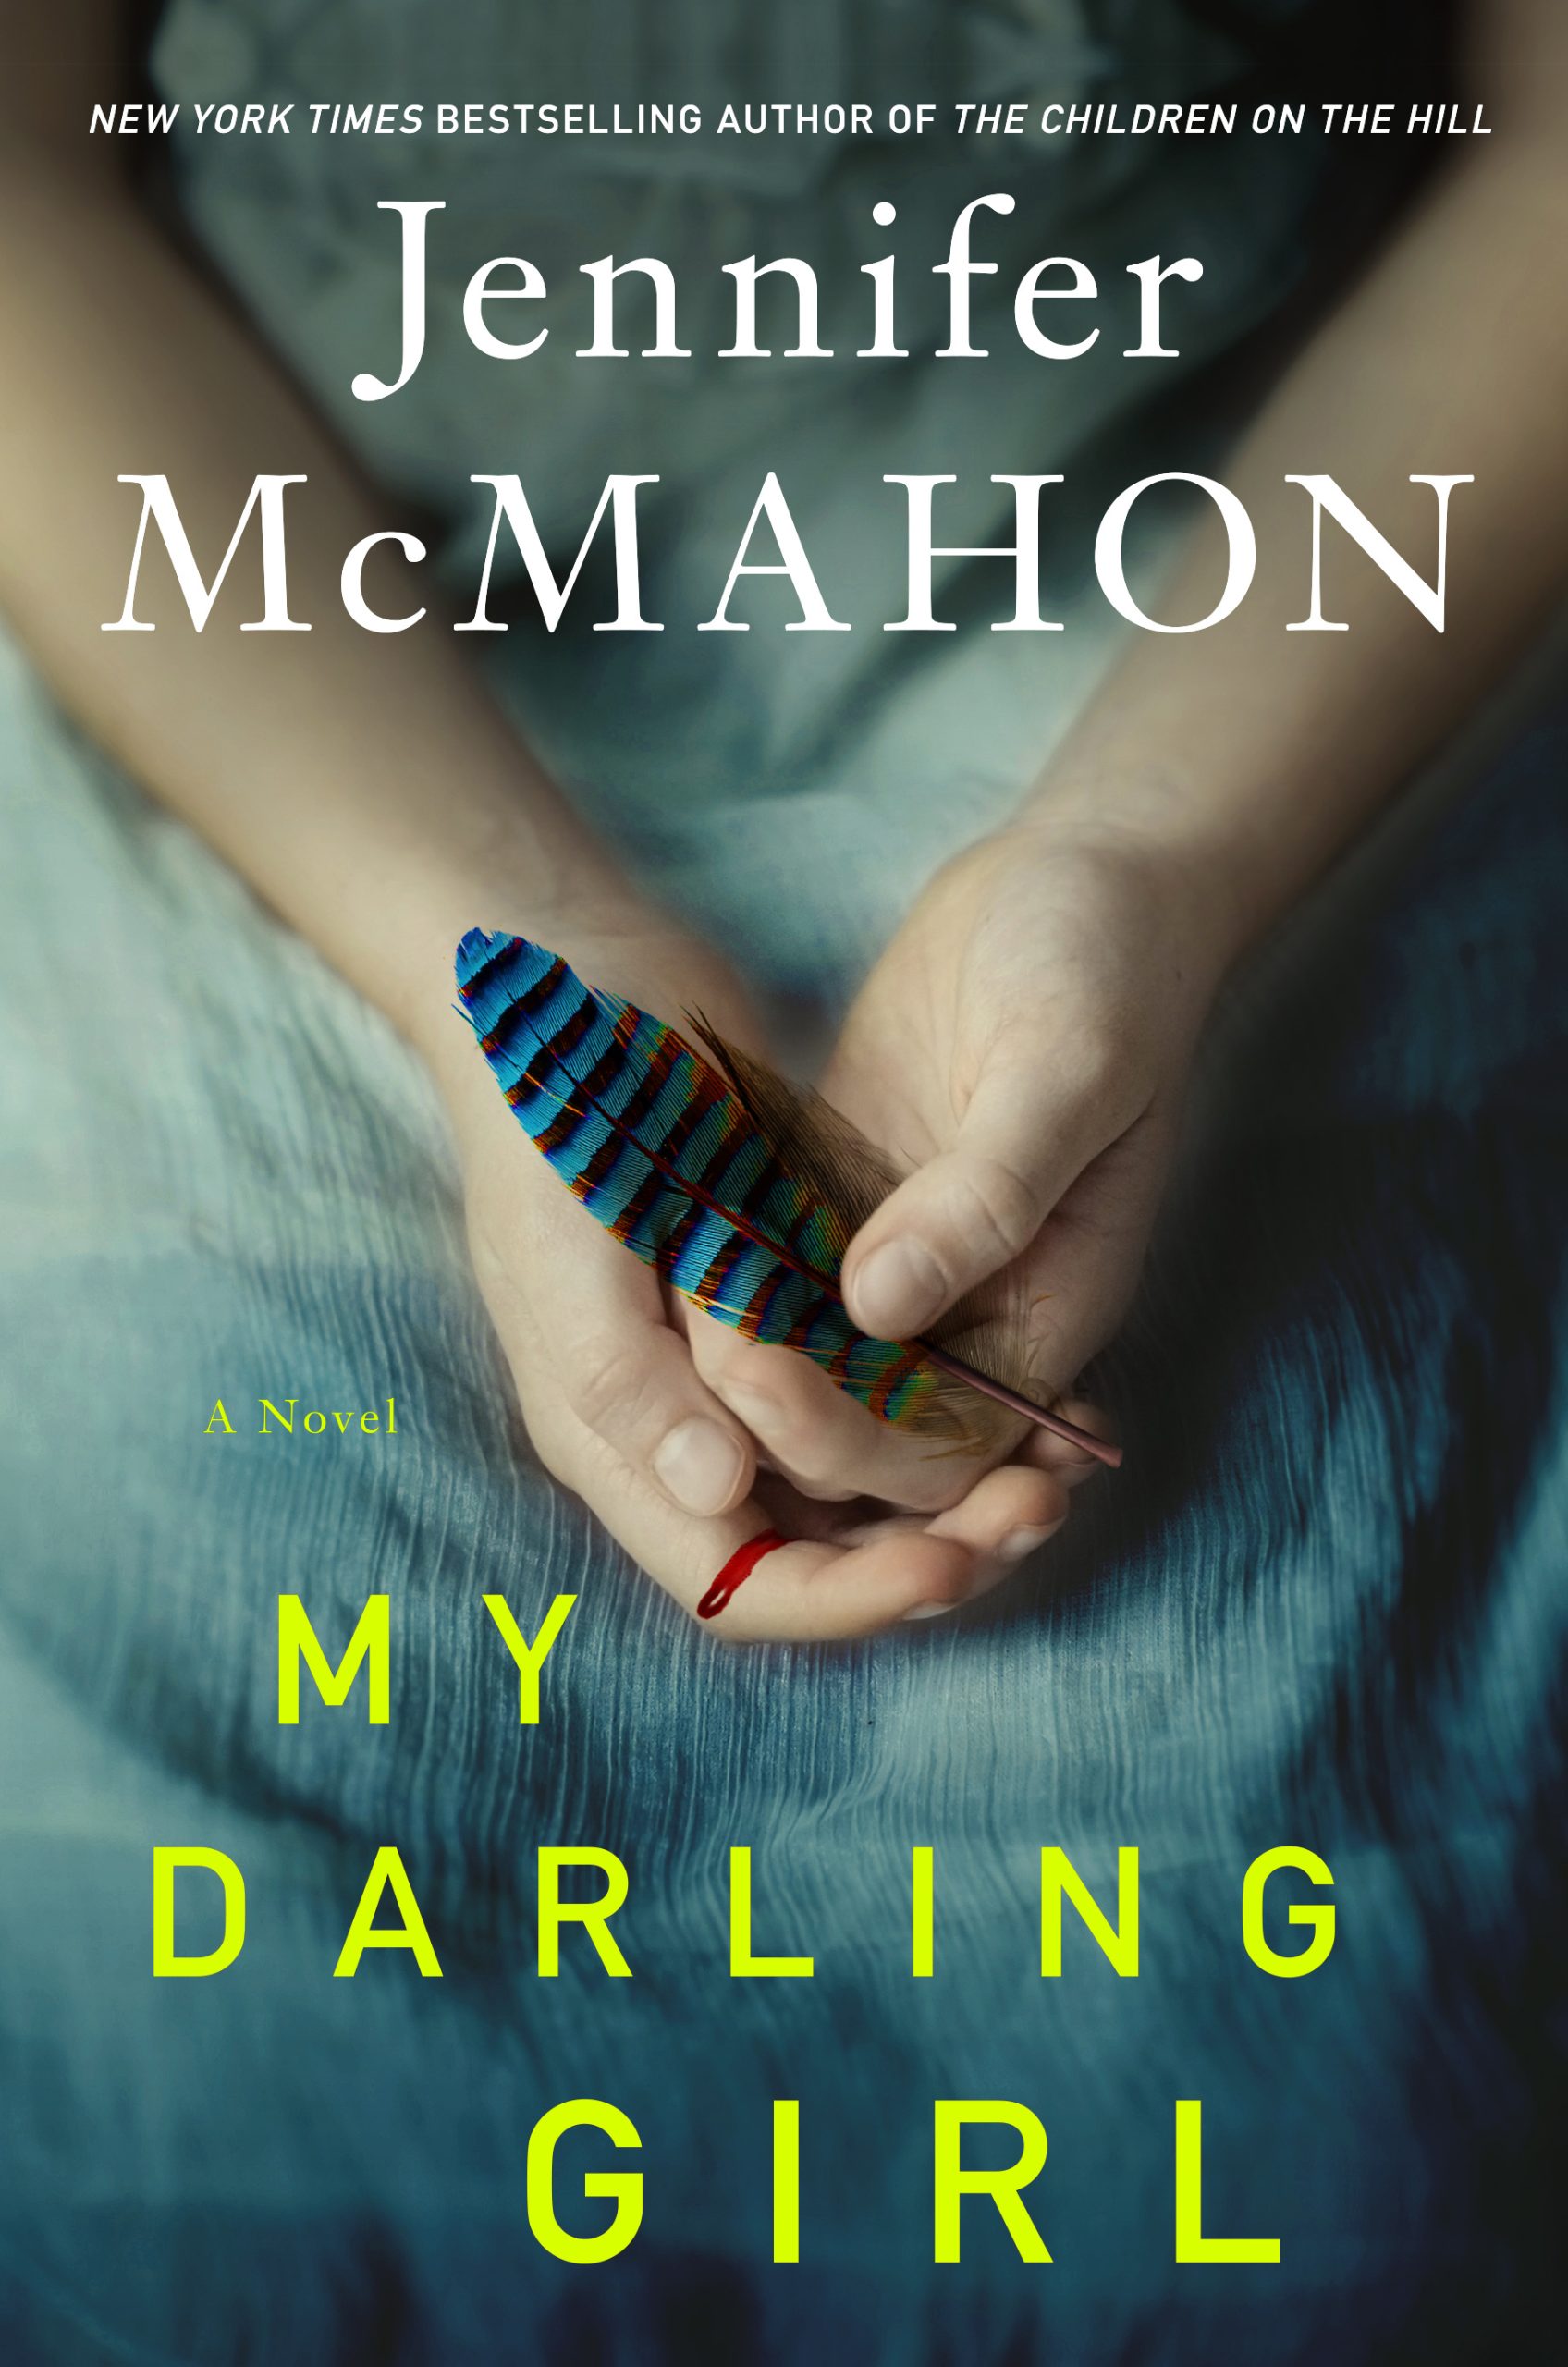 My Darling Girl by Jennifer McMahon